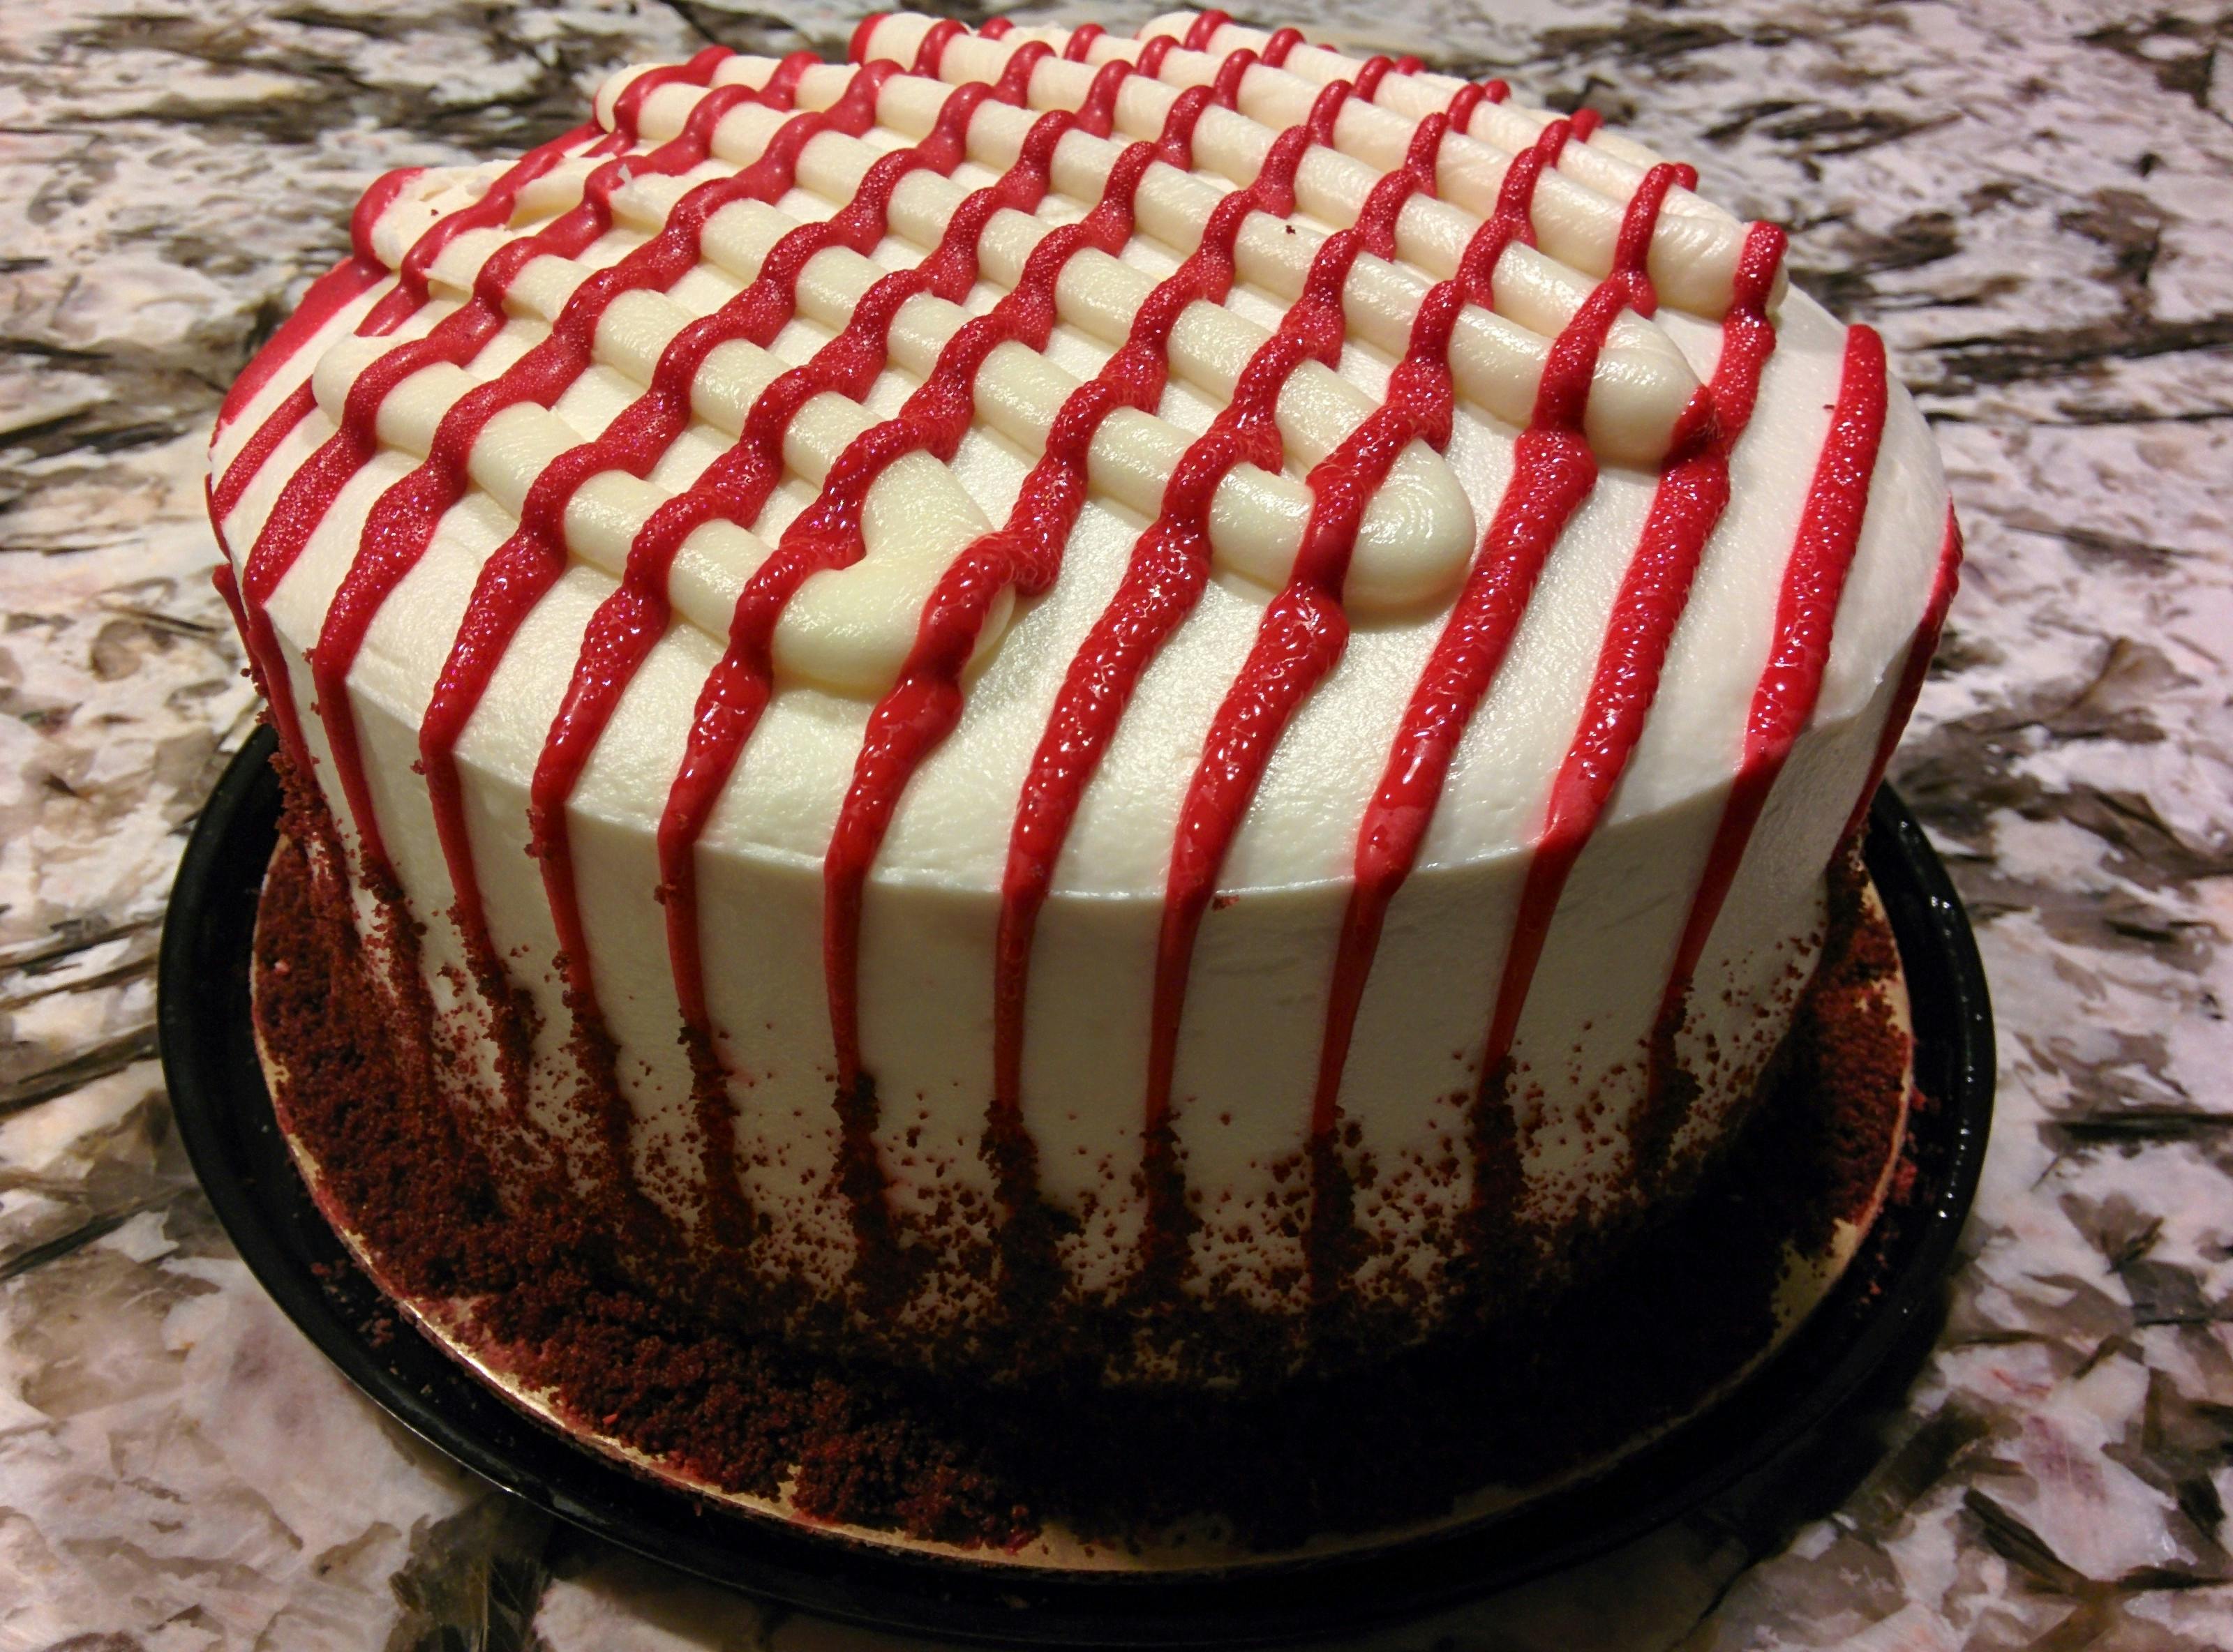 Free stock photo of cake, decorative cake, red cake